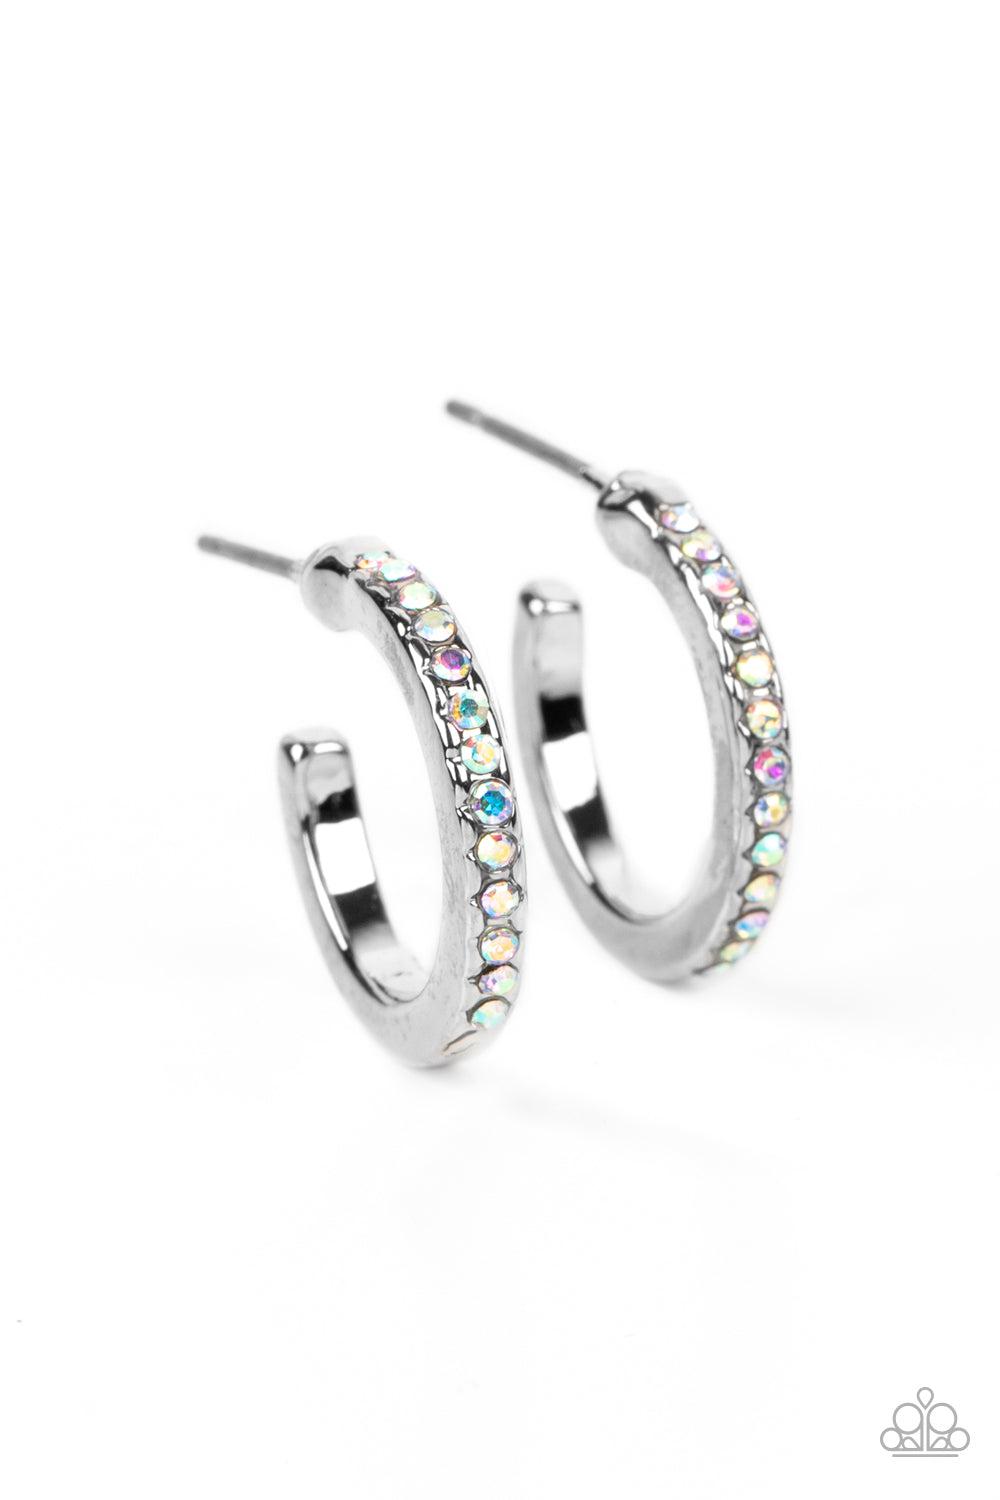 Audaciously Angelic Multi Iridescent Rhinestone Hoop Earrings - Paparazzi Accessories- lightbox - CarasShop.com - $5 Jewelry by Cara Jewels